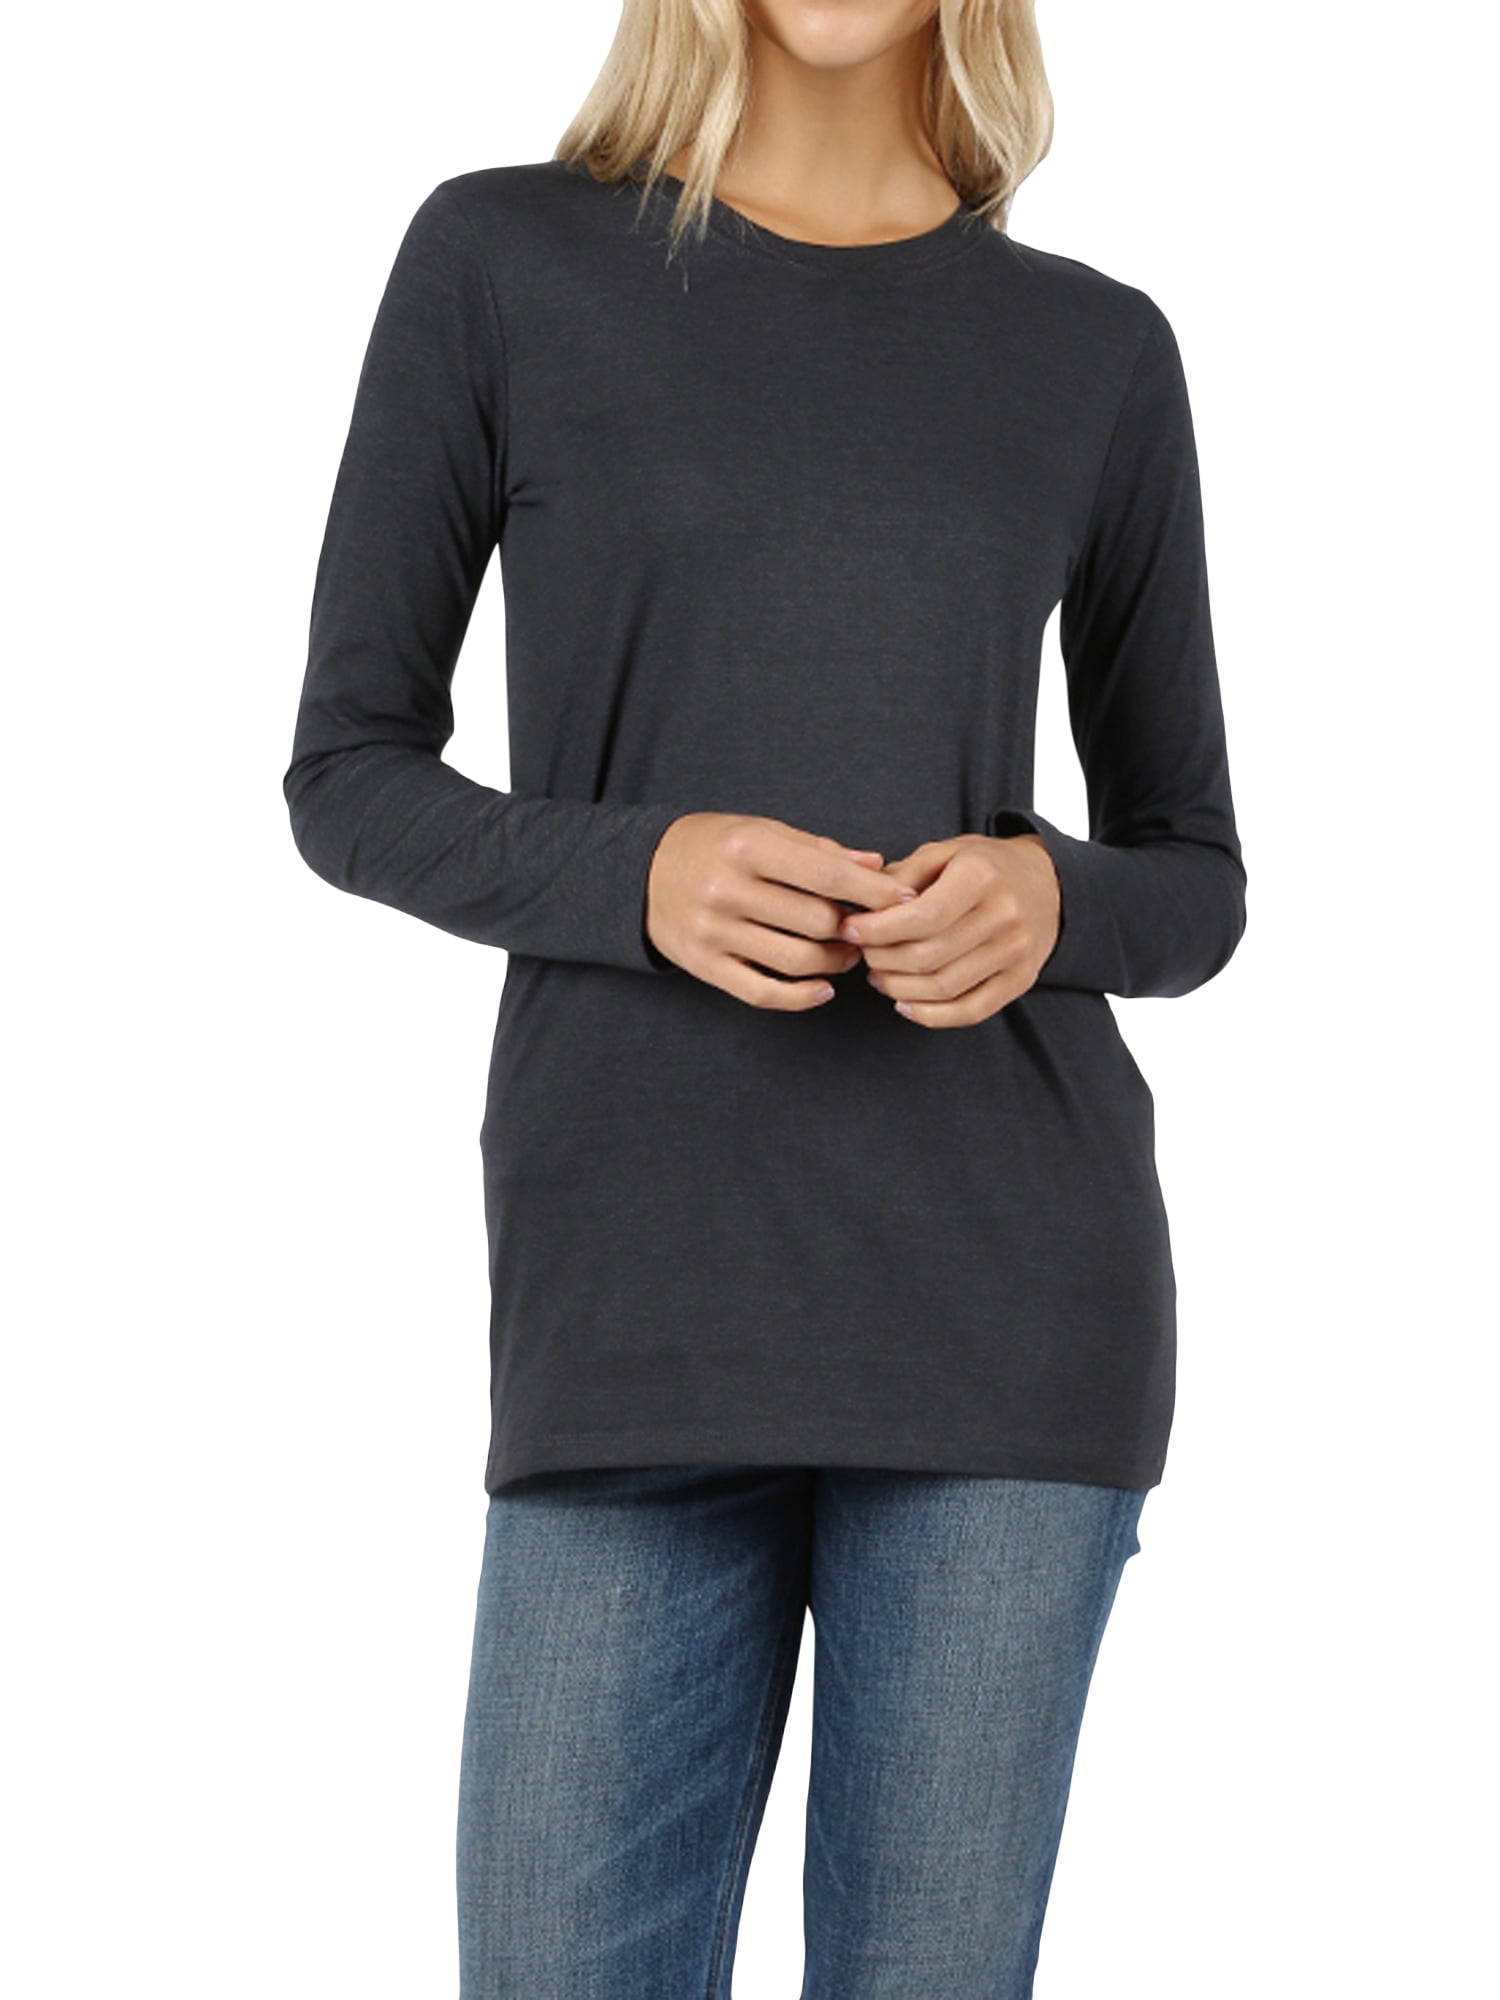 Lands' End Women's Tall Cotton Rib Long Sleeve Crewneck T-Shirt, Size: Tall Small, Brown